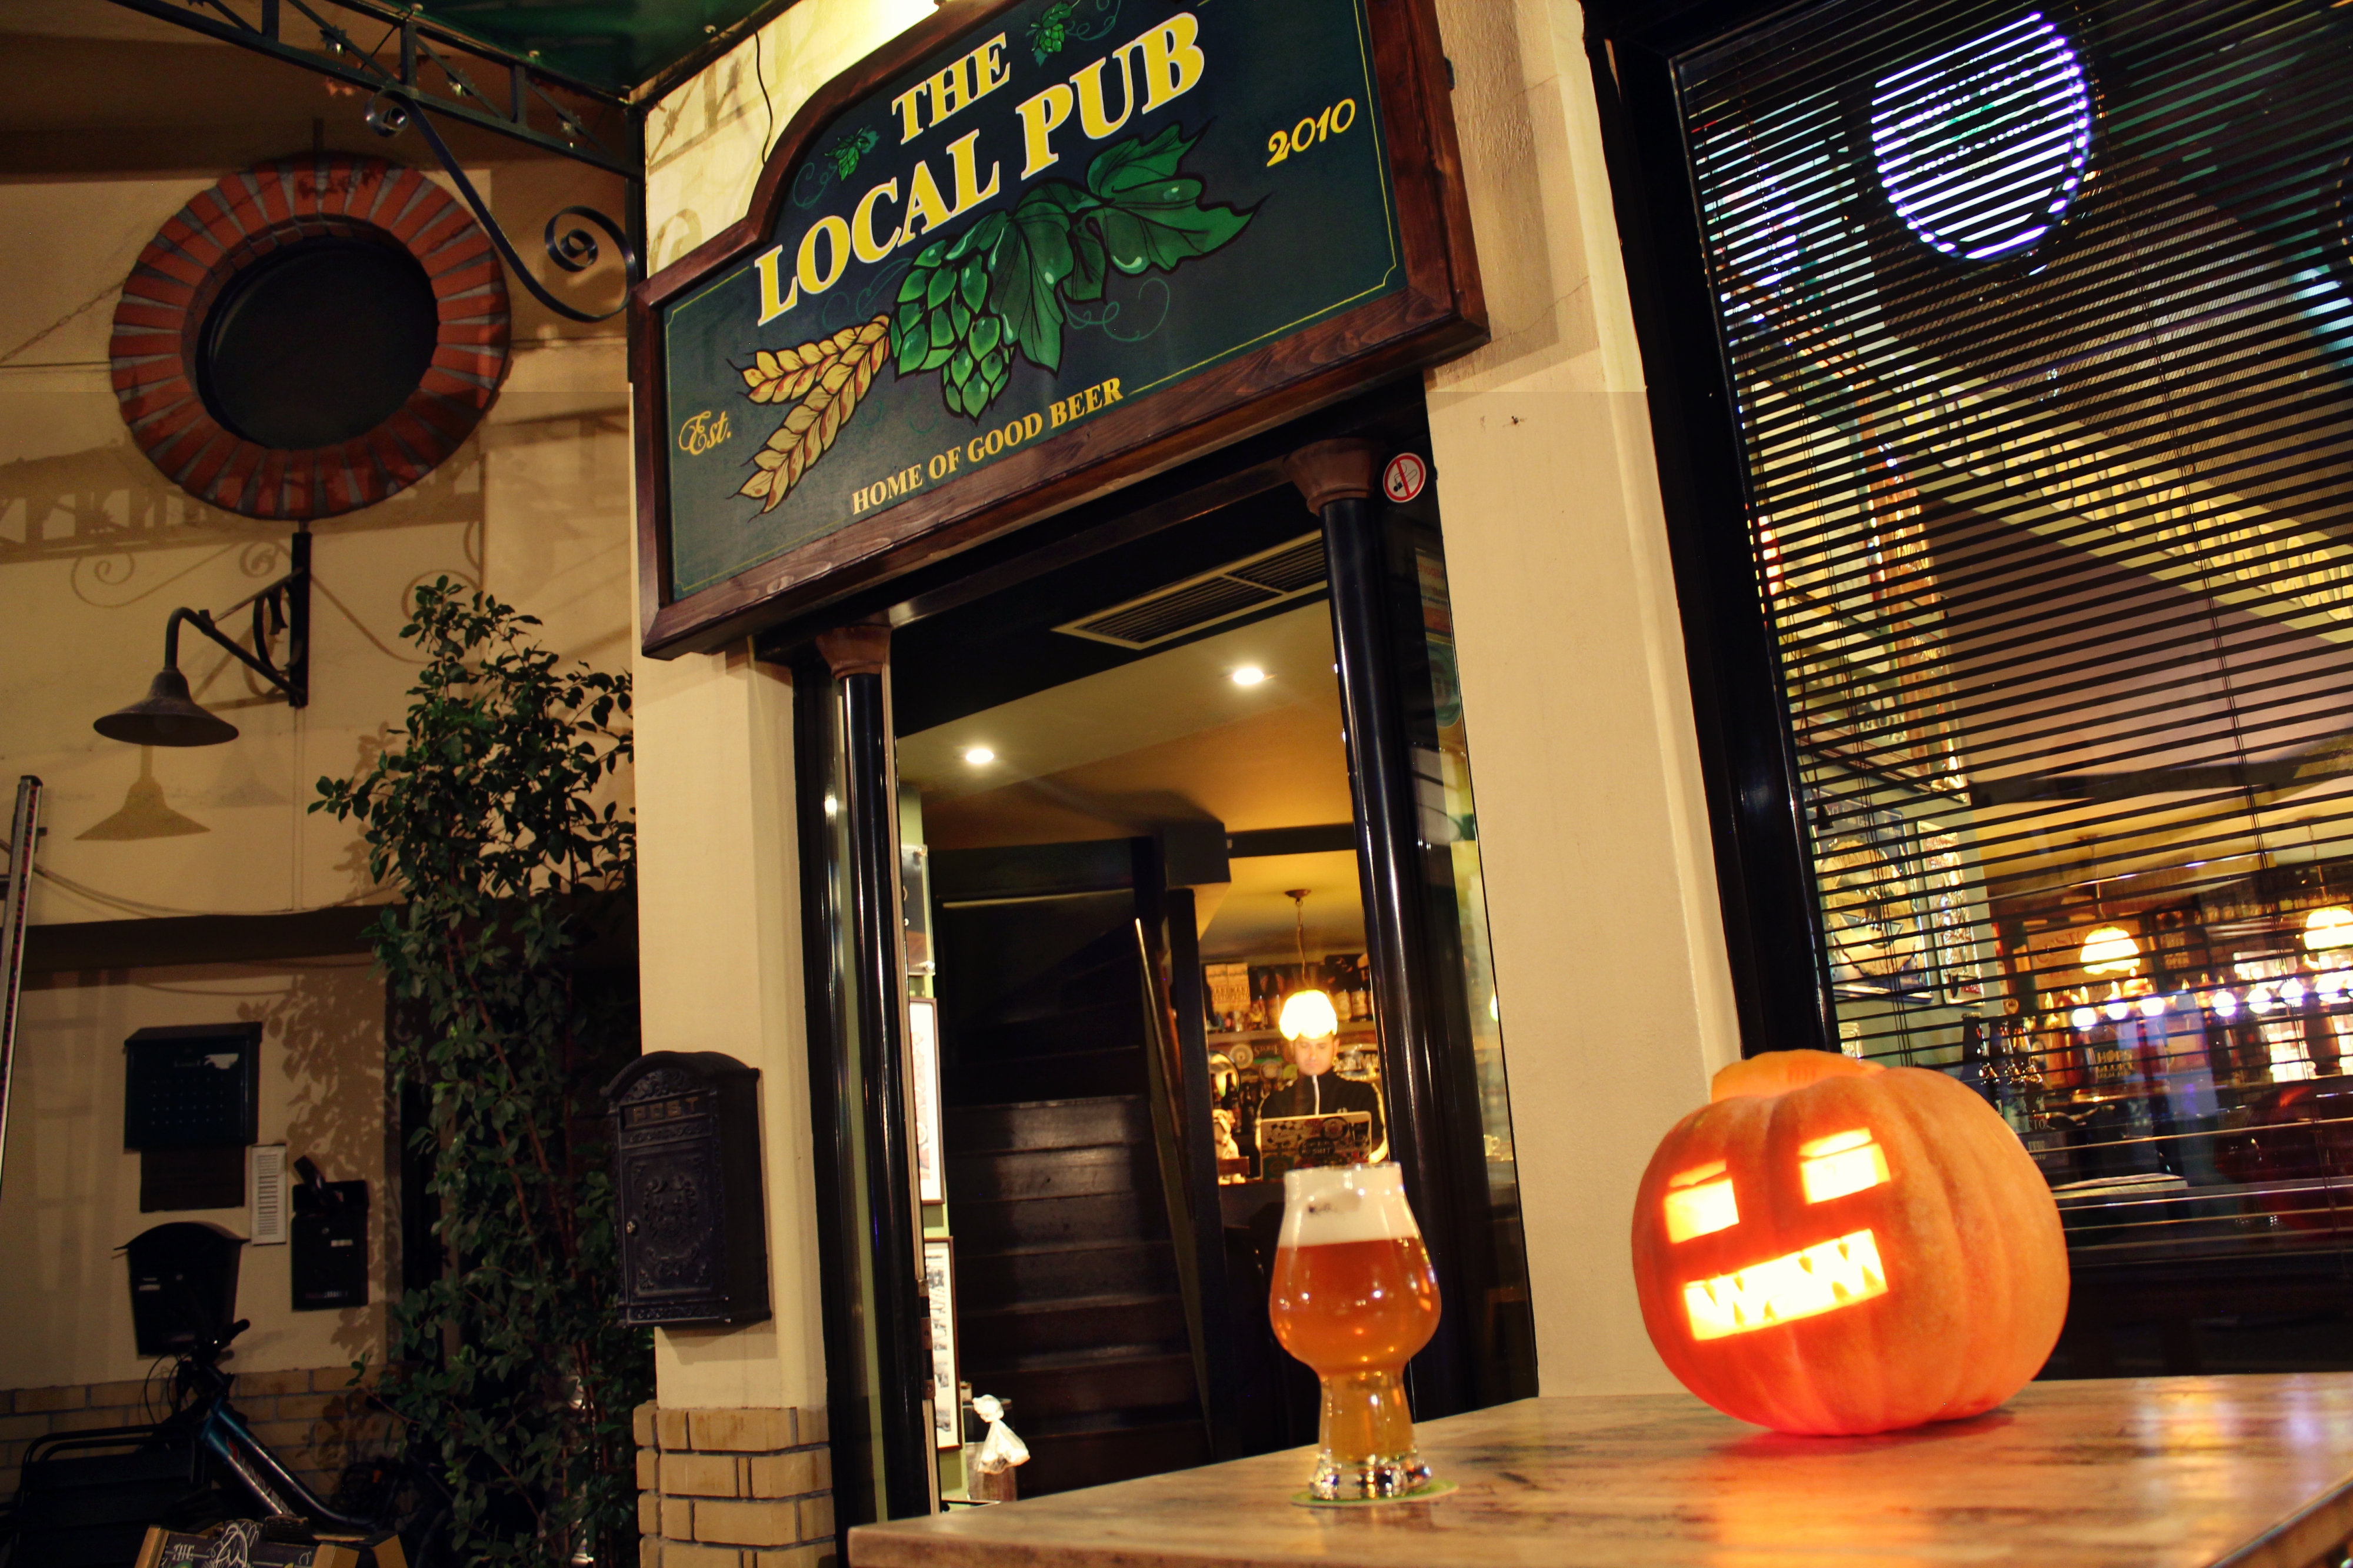 H Local Pub στο Χαλάνδρι είναι το βασικό σημείο πώλησης της Menace στην Αθήνα